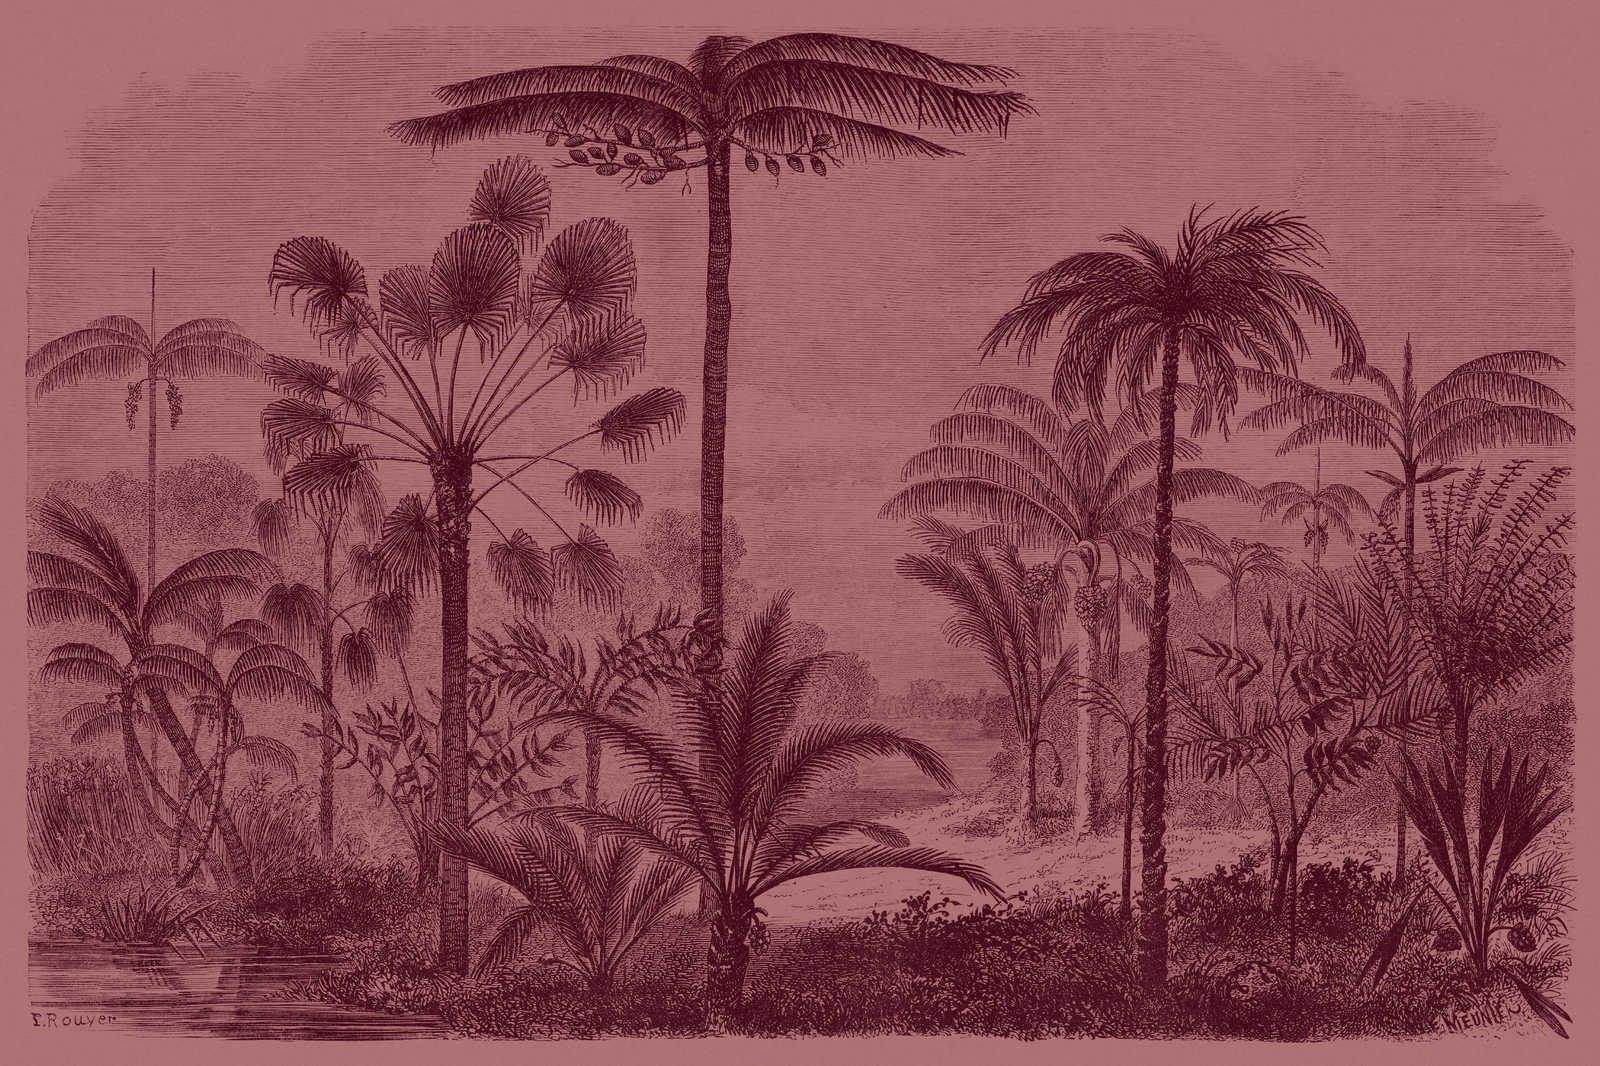             Jurassic 2 - Canvas painting Jungle motif copperplate - 0.90 m x 0.60 m
        